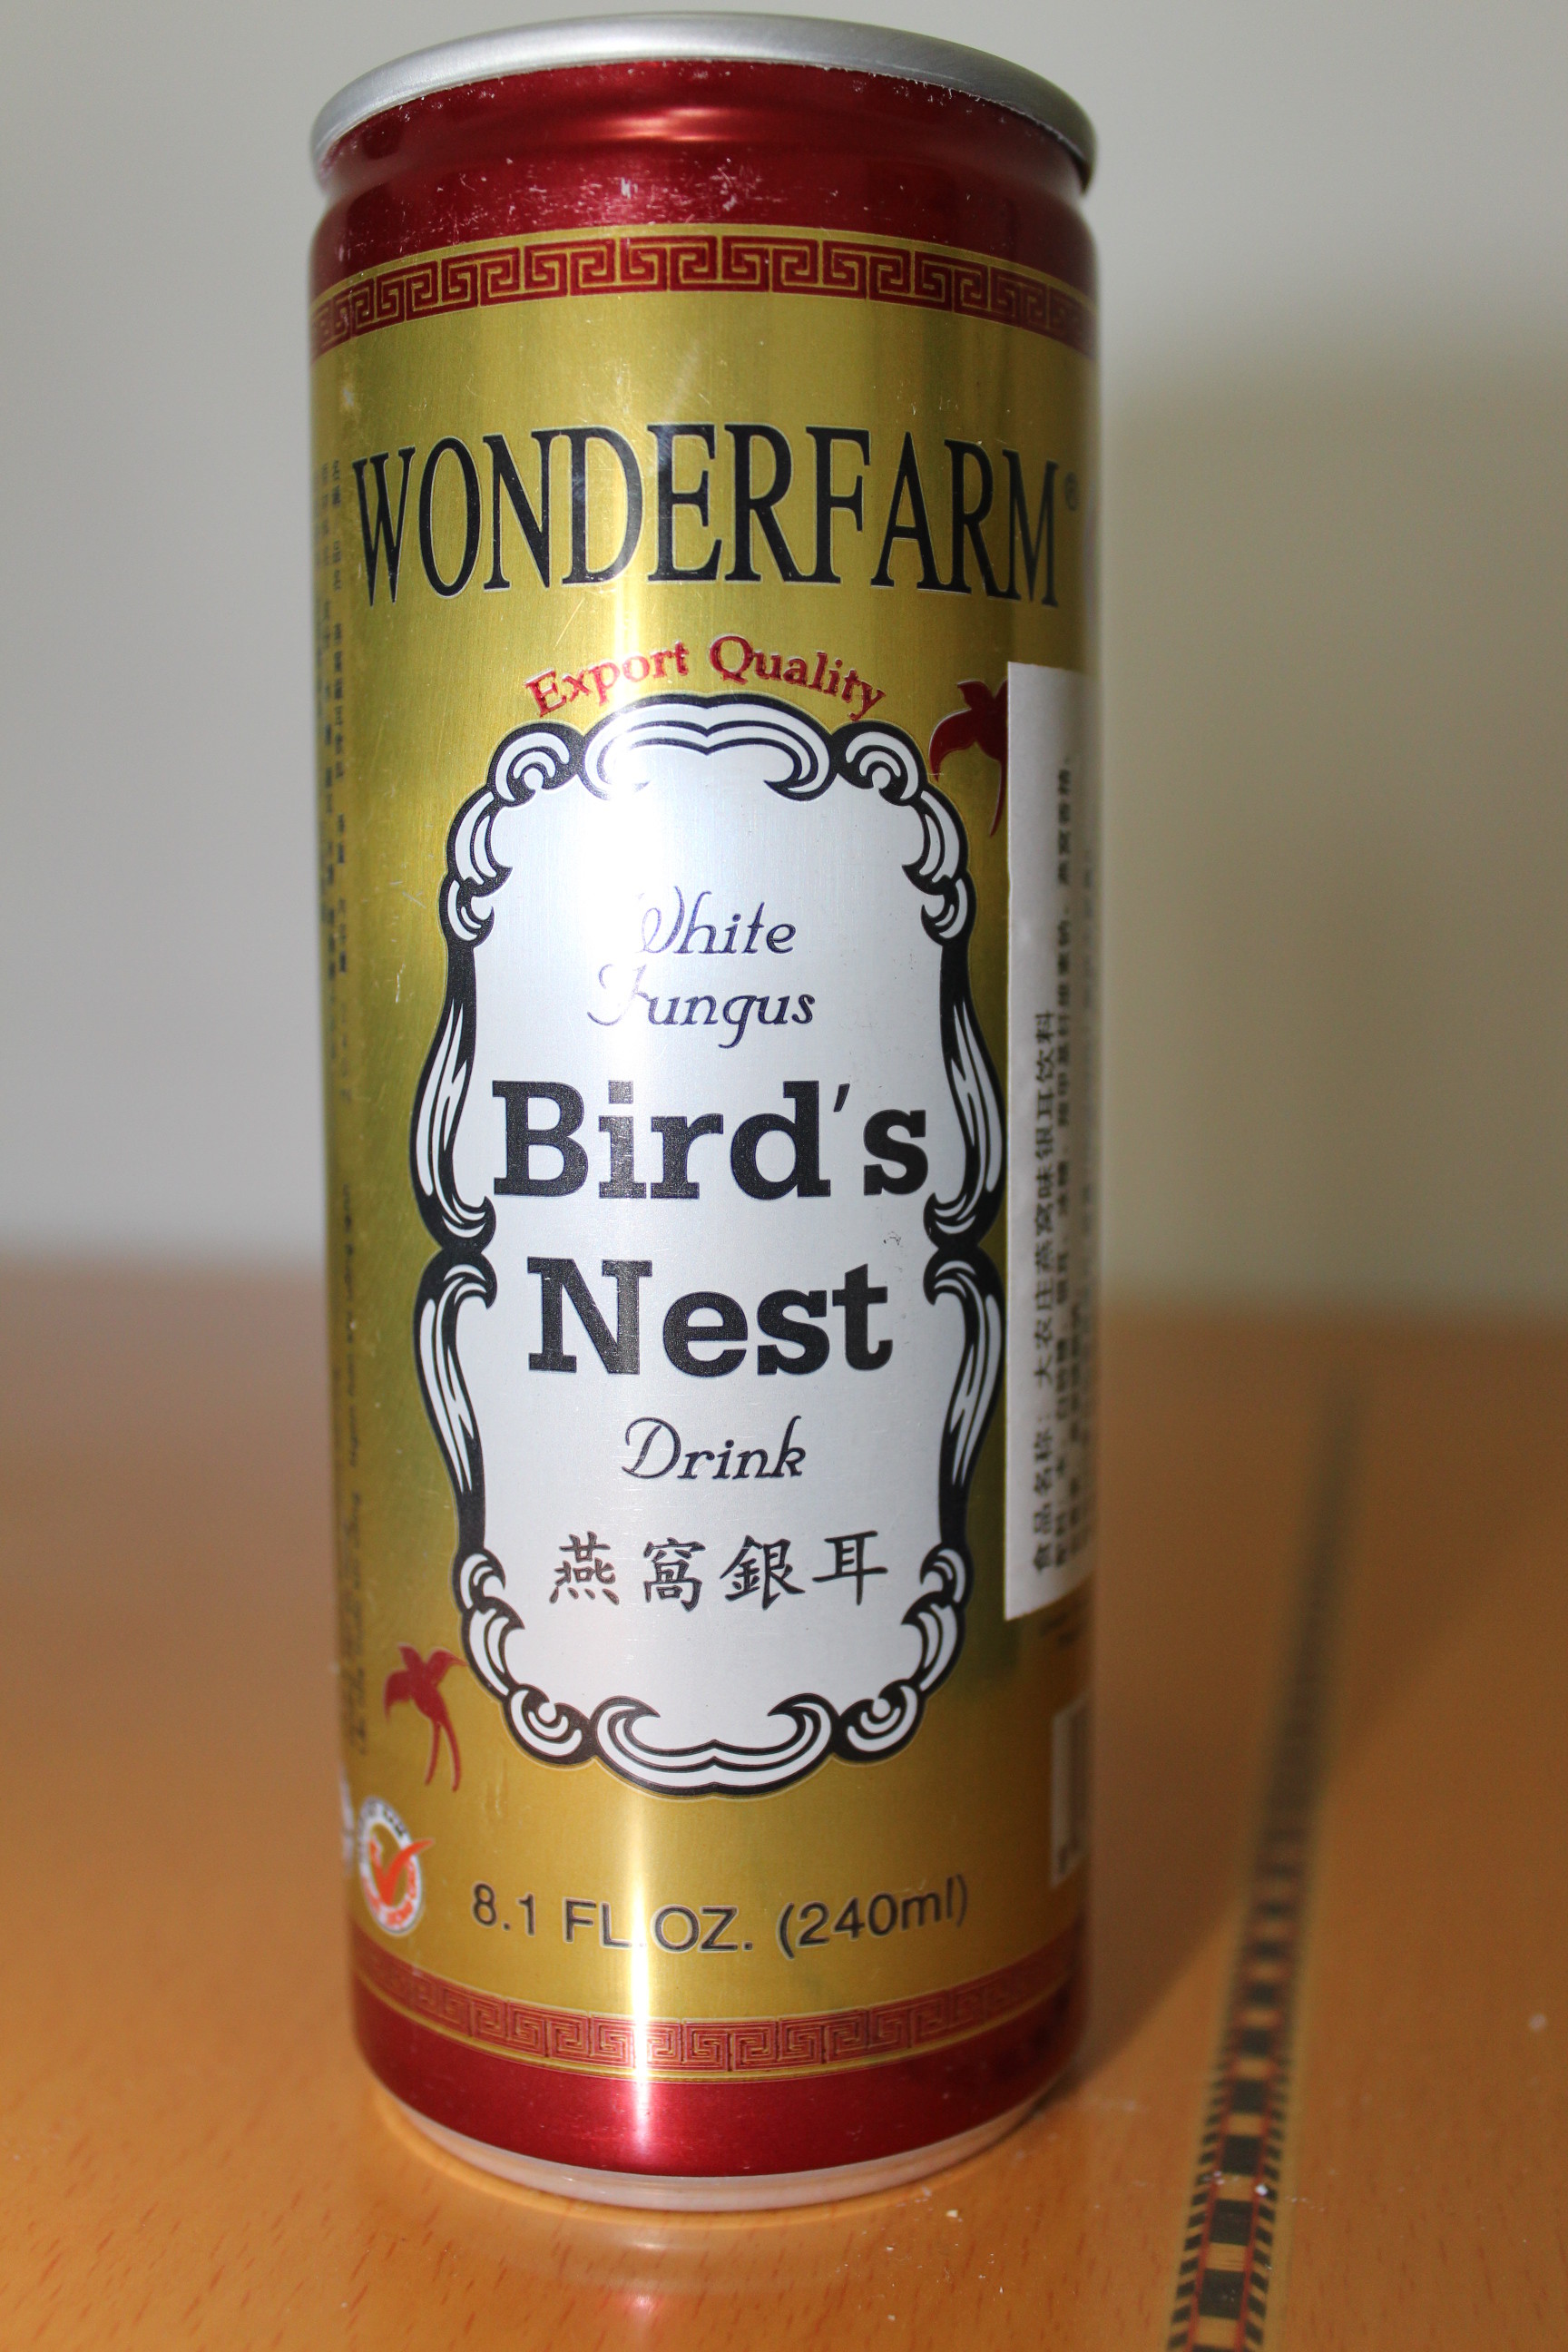 White Fungus Bird's Nest от Wonderfarm  еда, жесть, факты